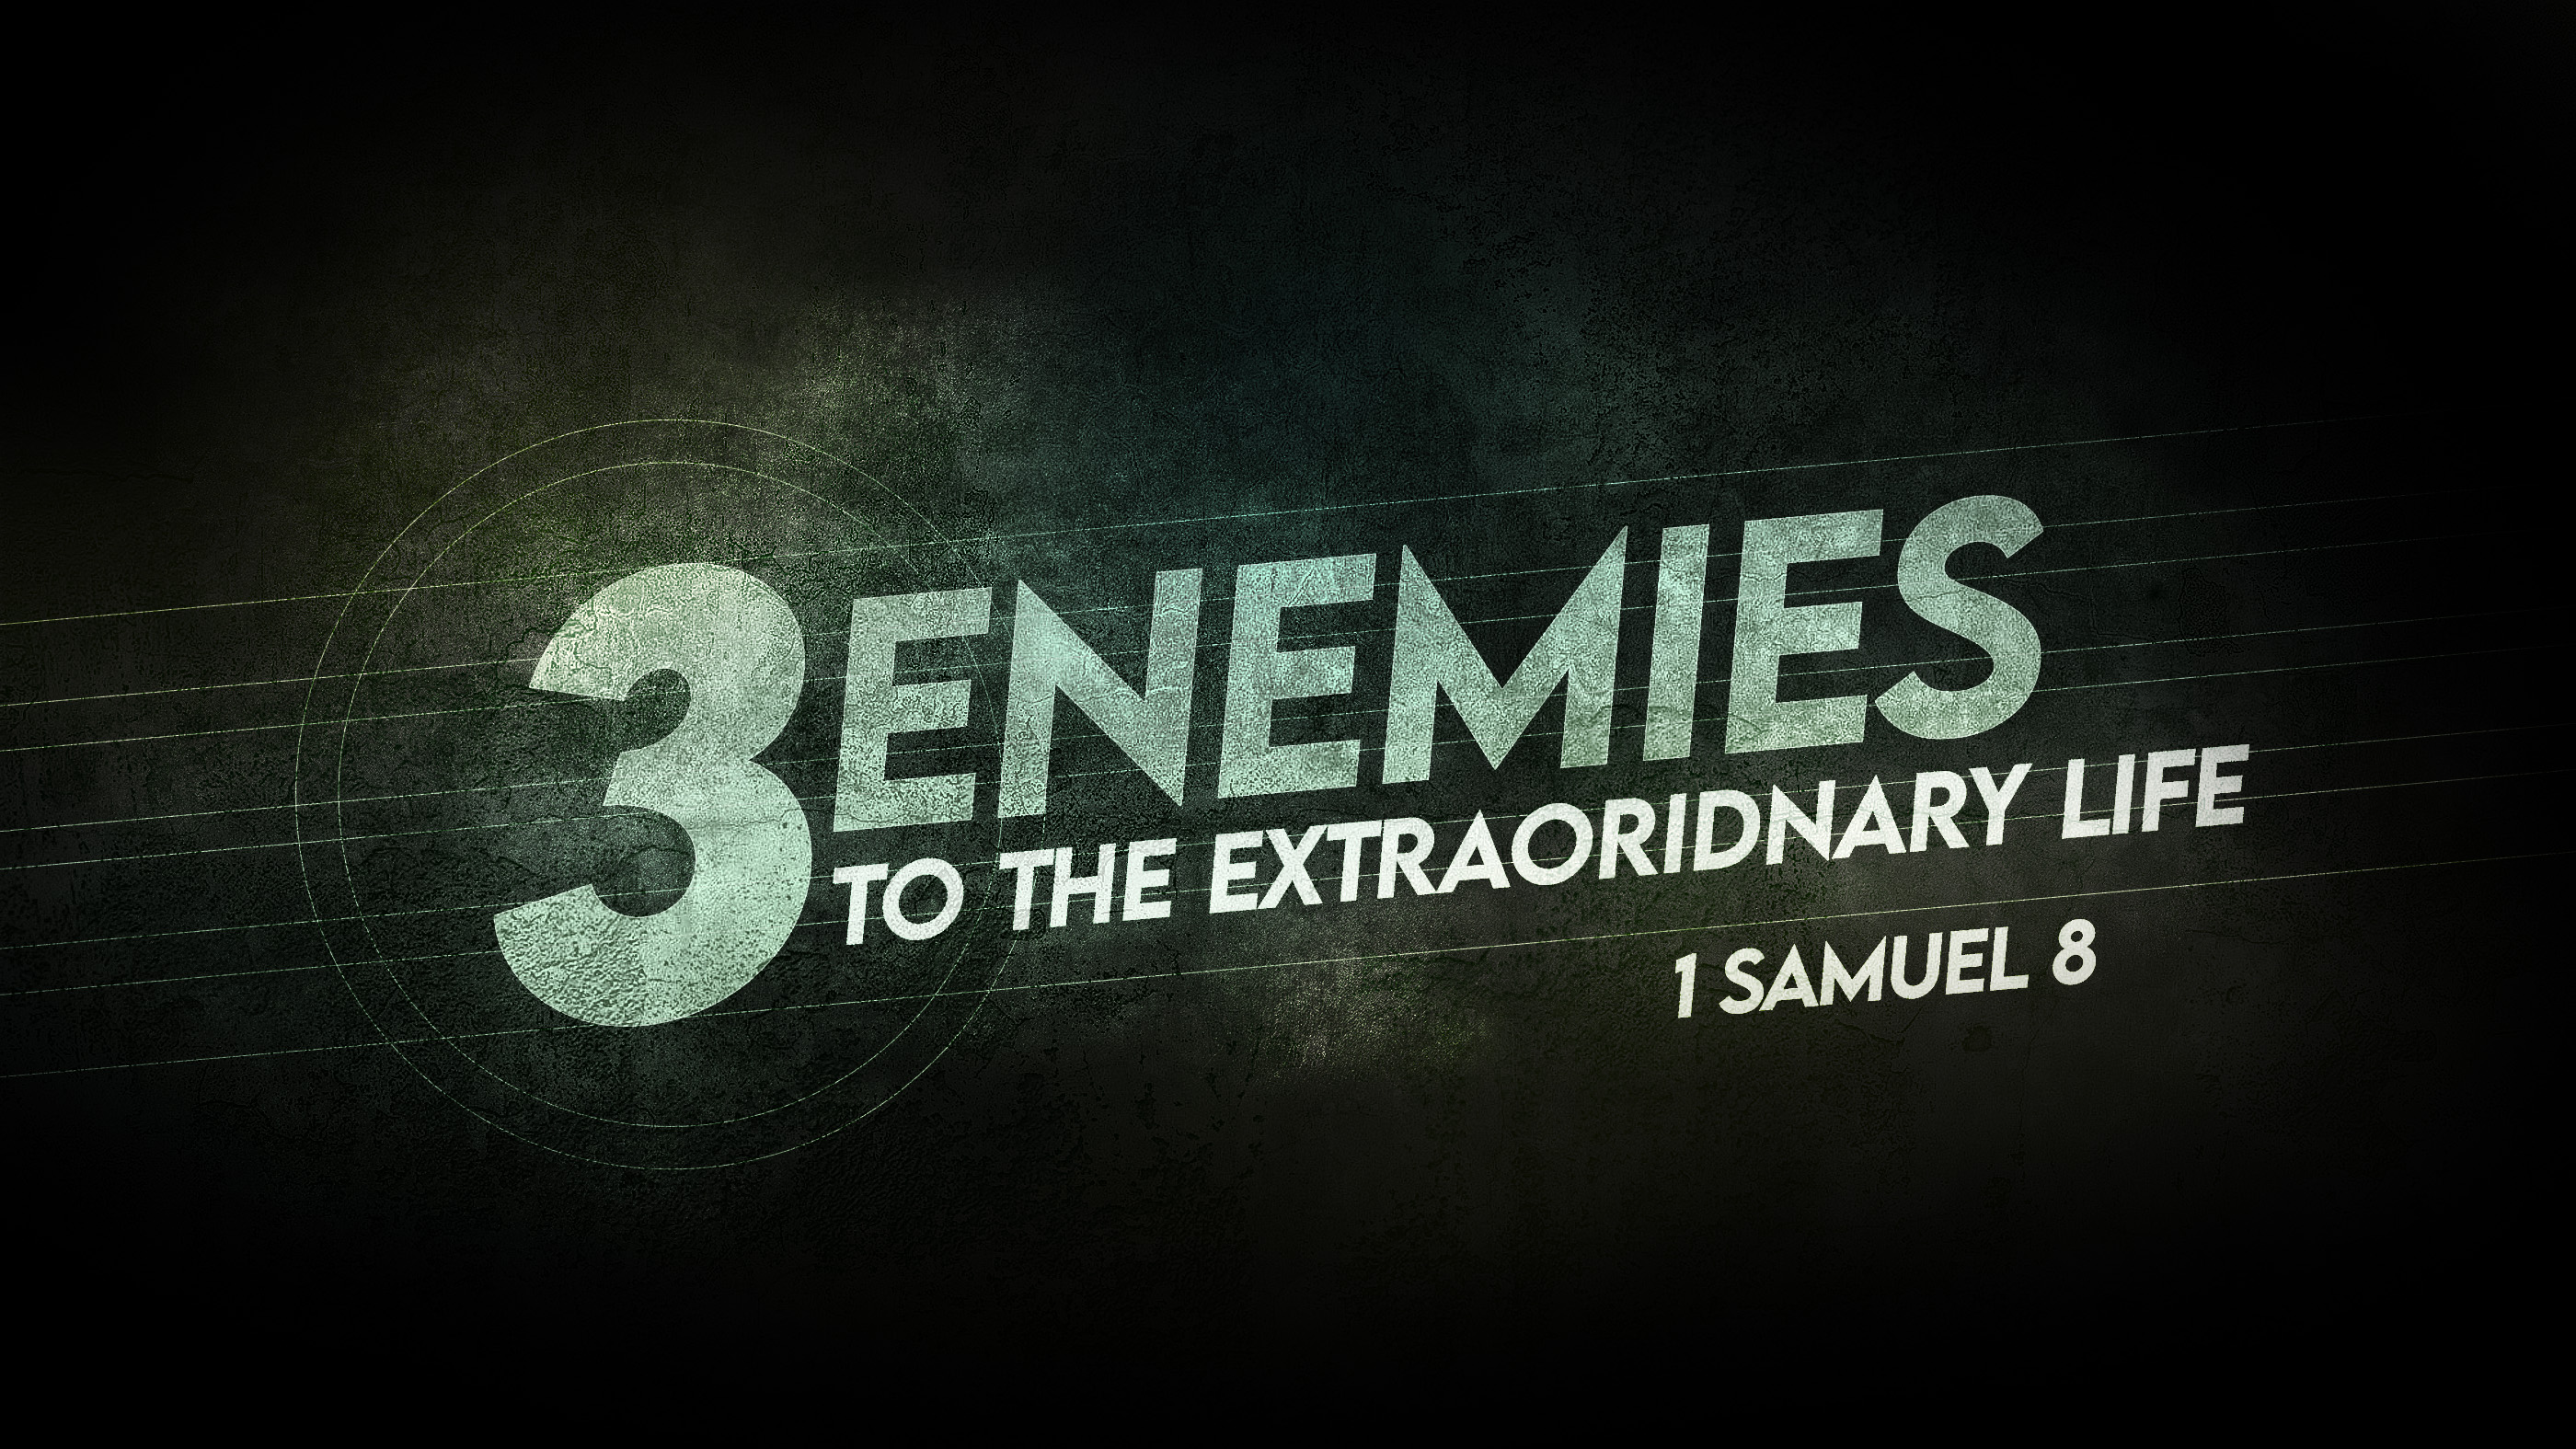 Three Enemies to the Extraordinary Life